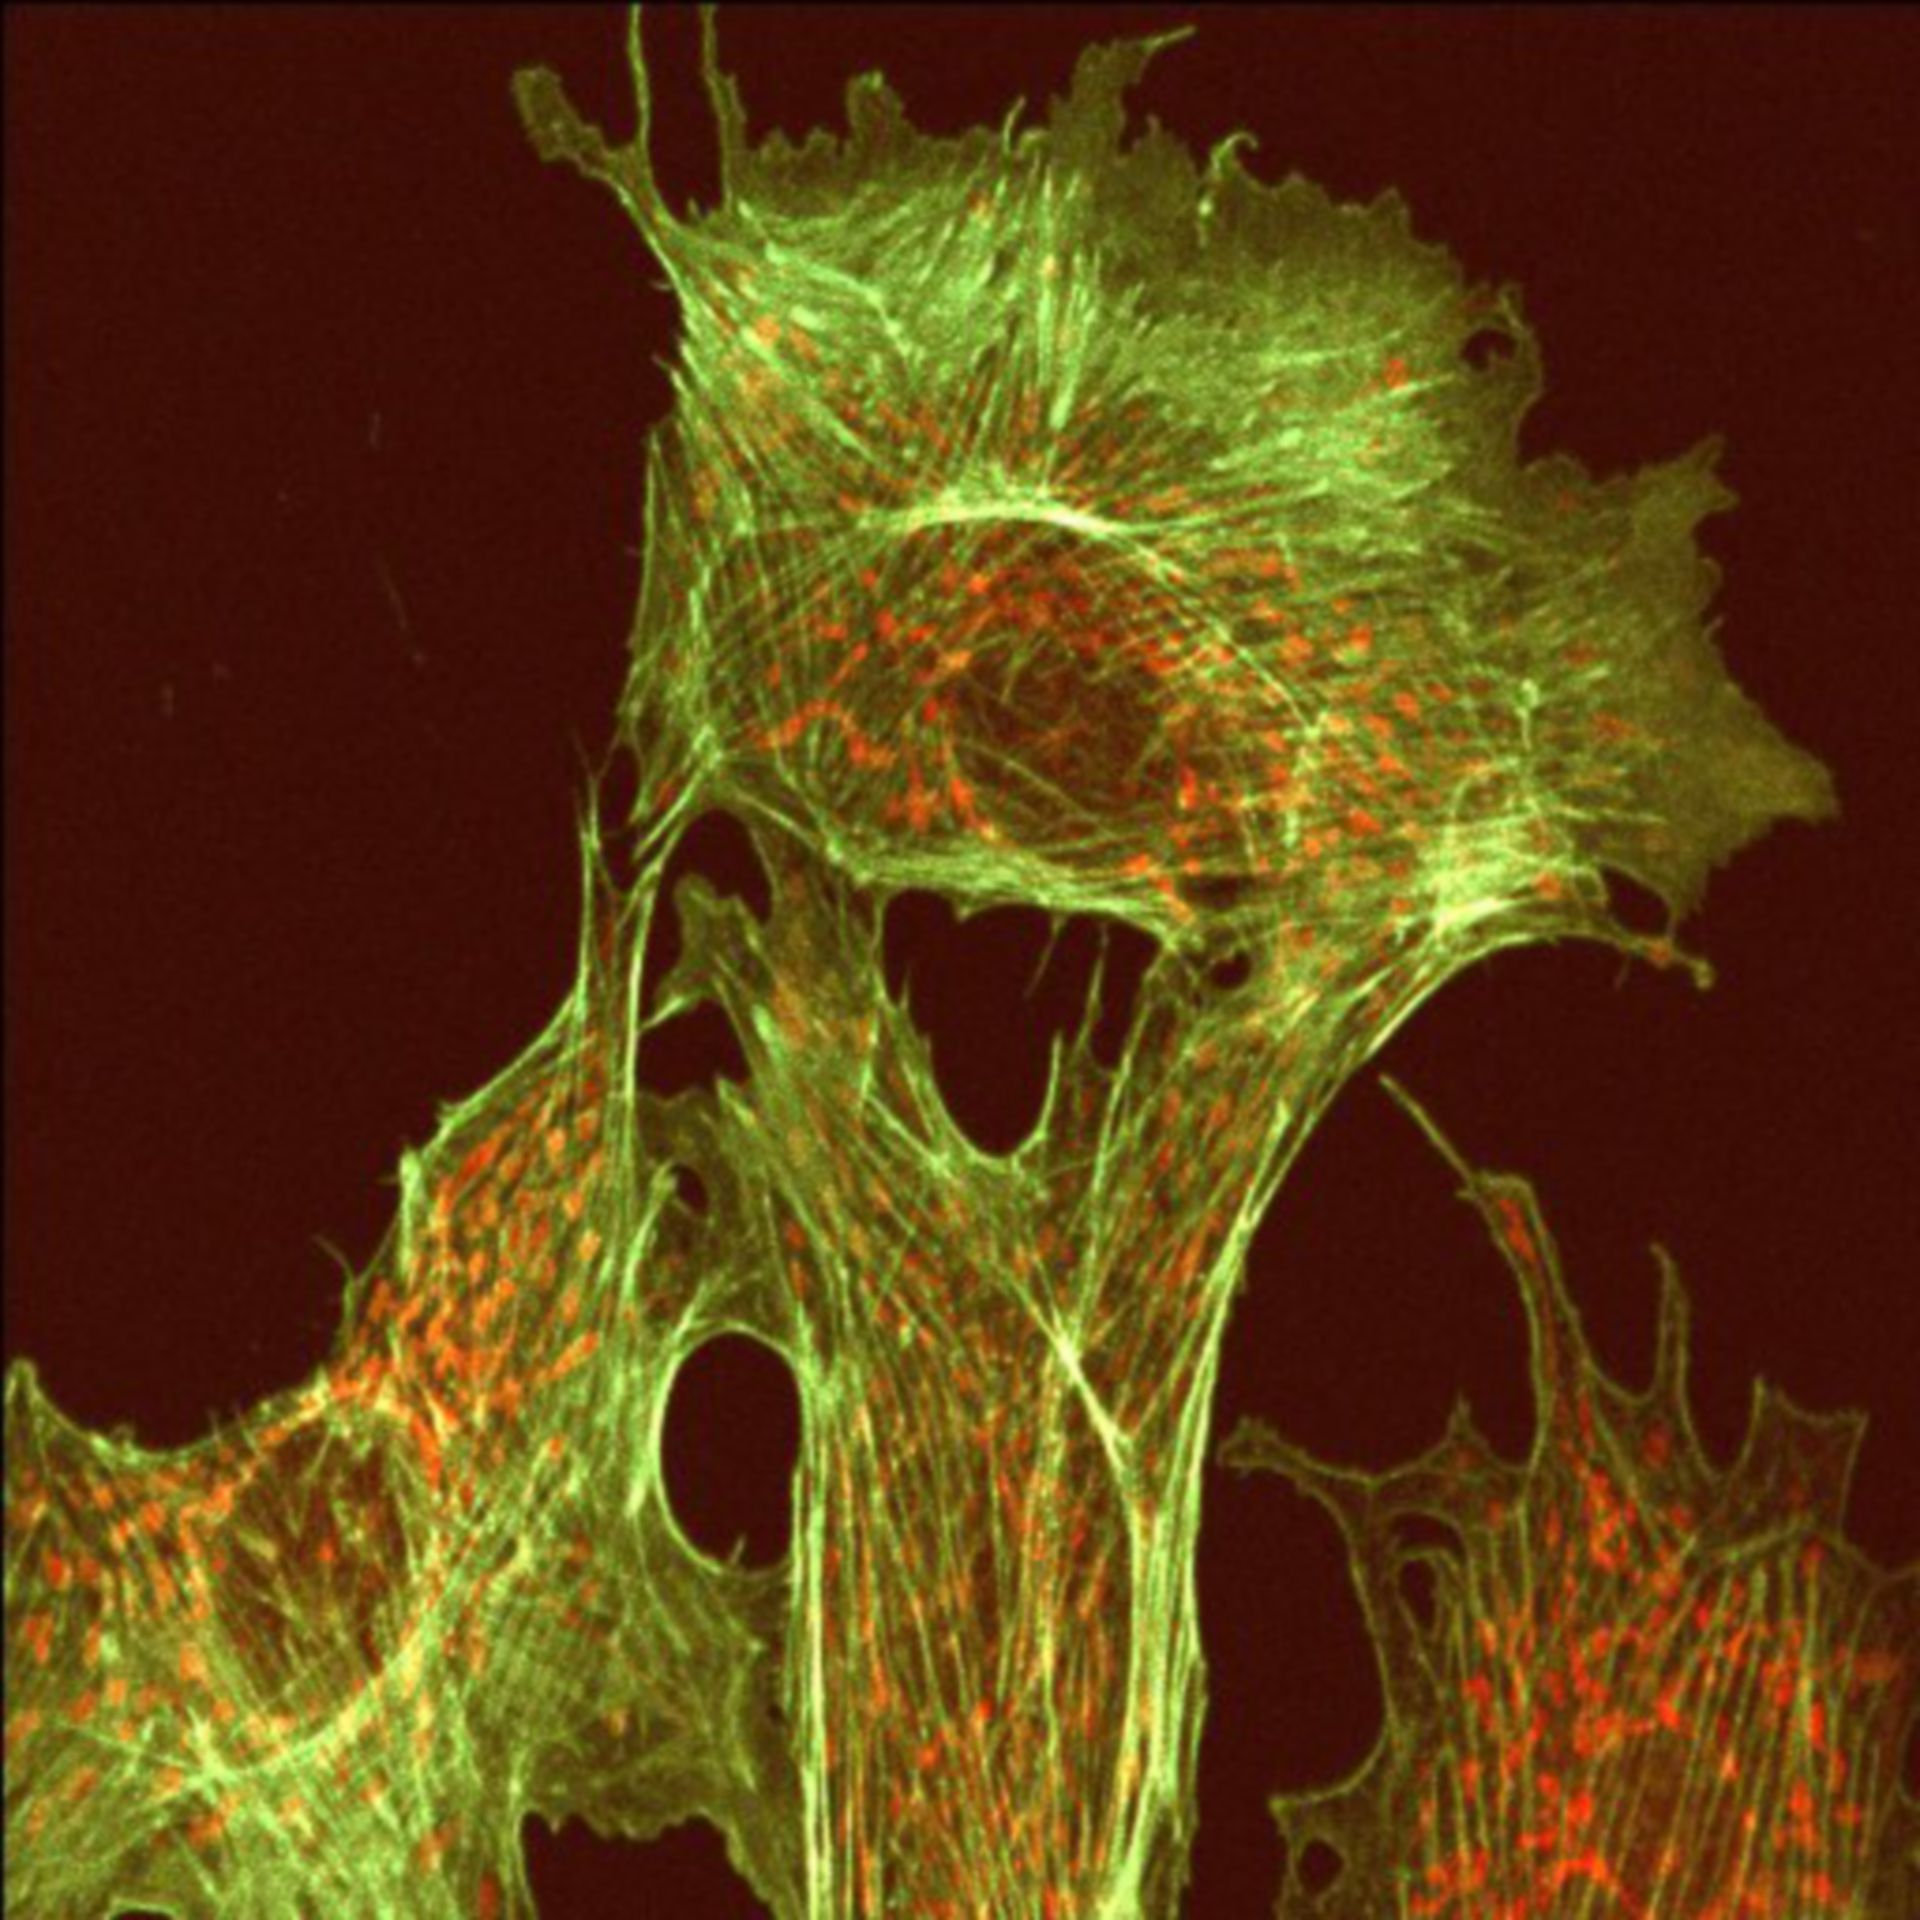 Bos primigenius (Microtubule cytoskeleton) - CIL:219